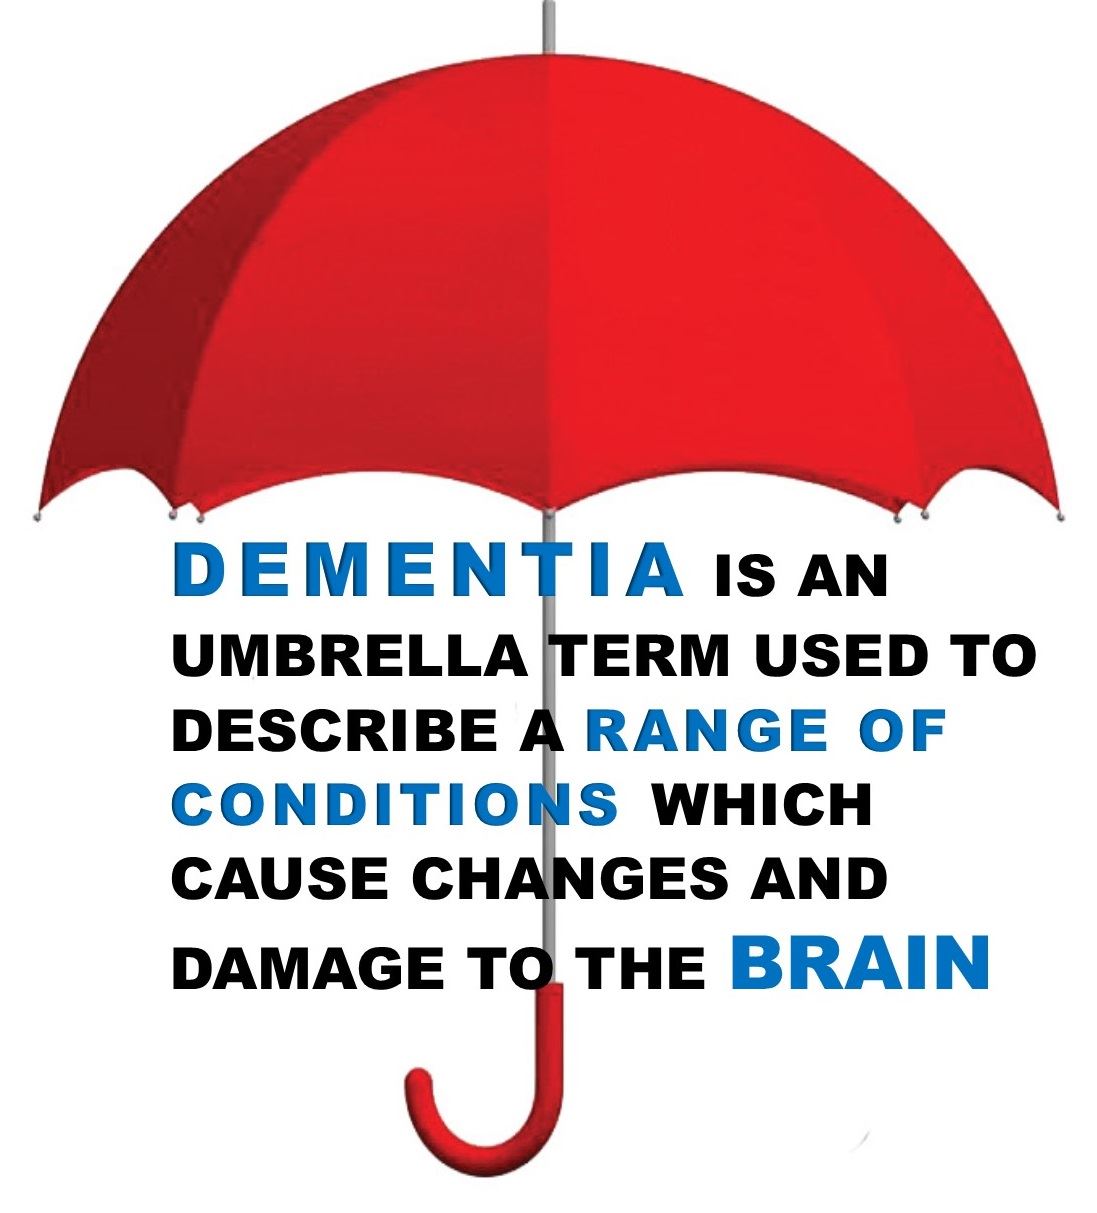 Dementia is an umbrella term graphic